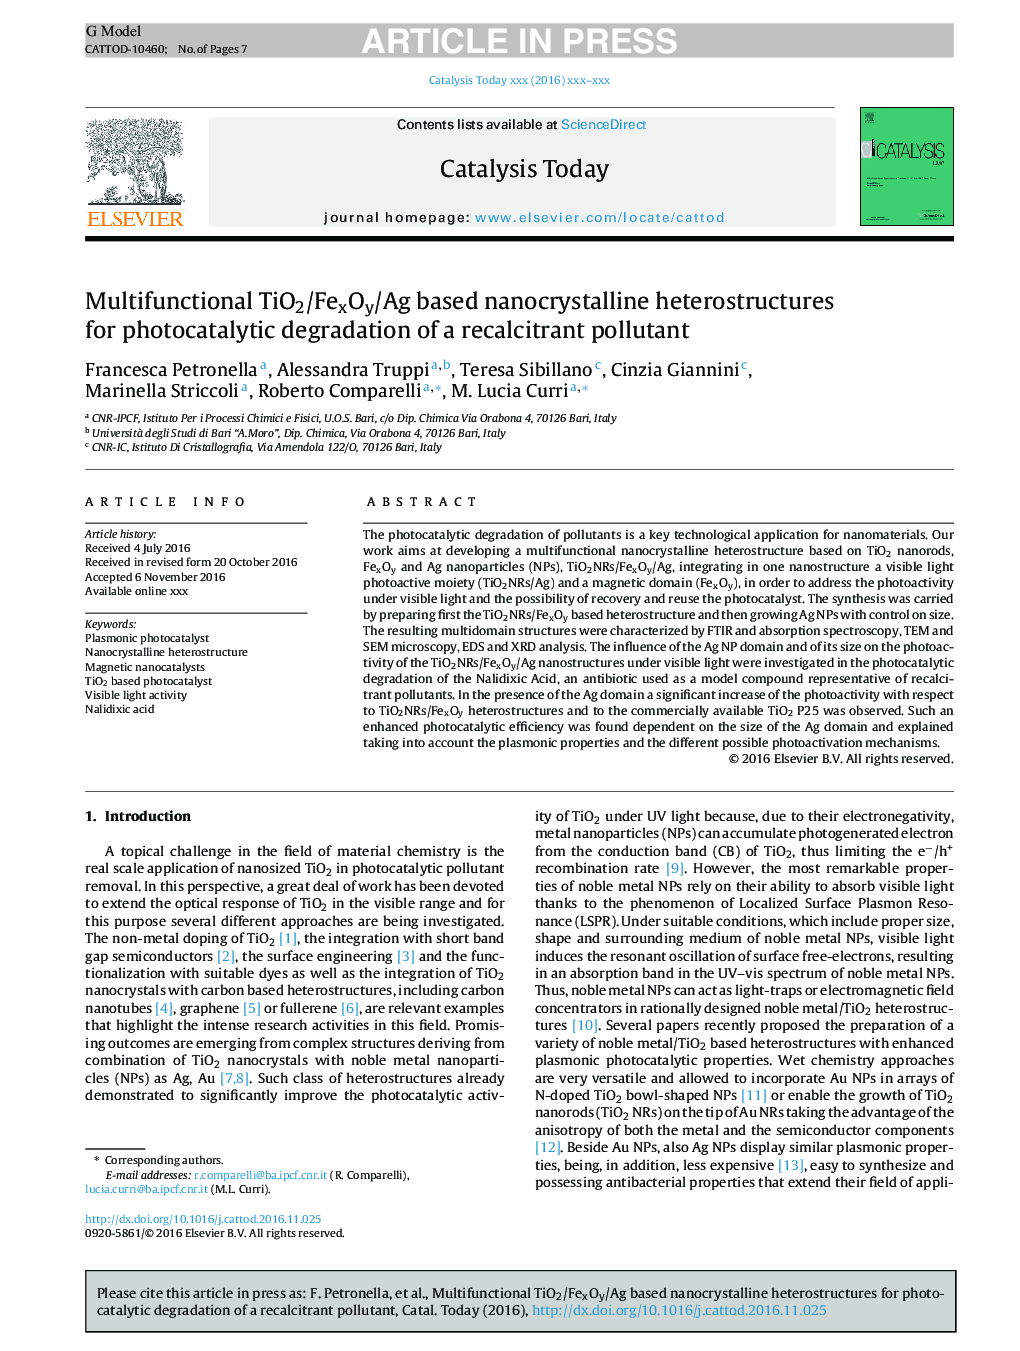 Multifunctional TiO2/FexOy/Ag based nanocrystalline heterostructures for photocatalytic degradation of a recalcitrant pollutant